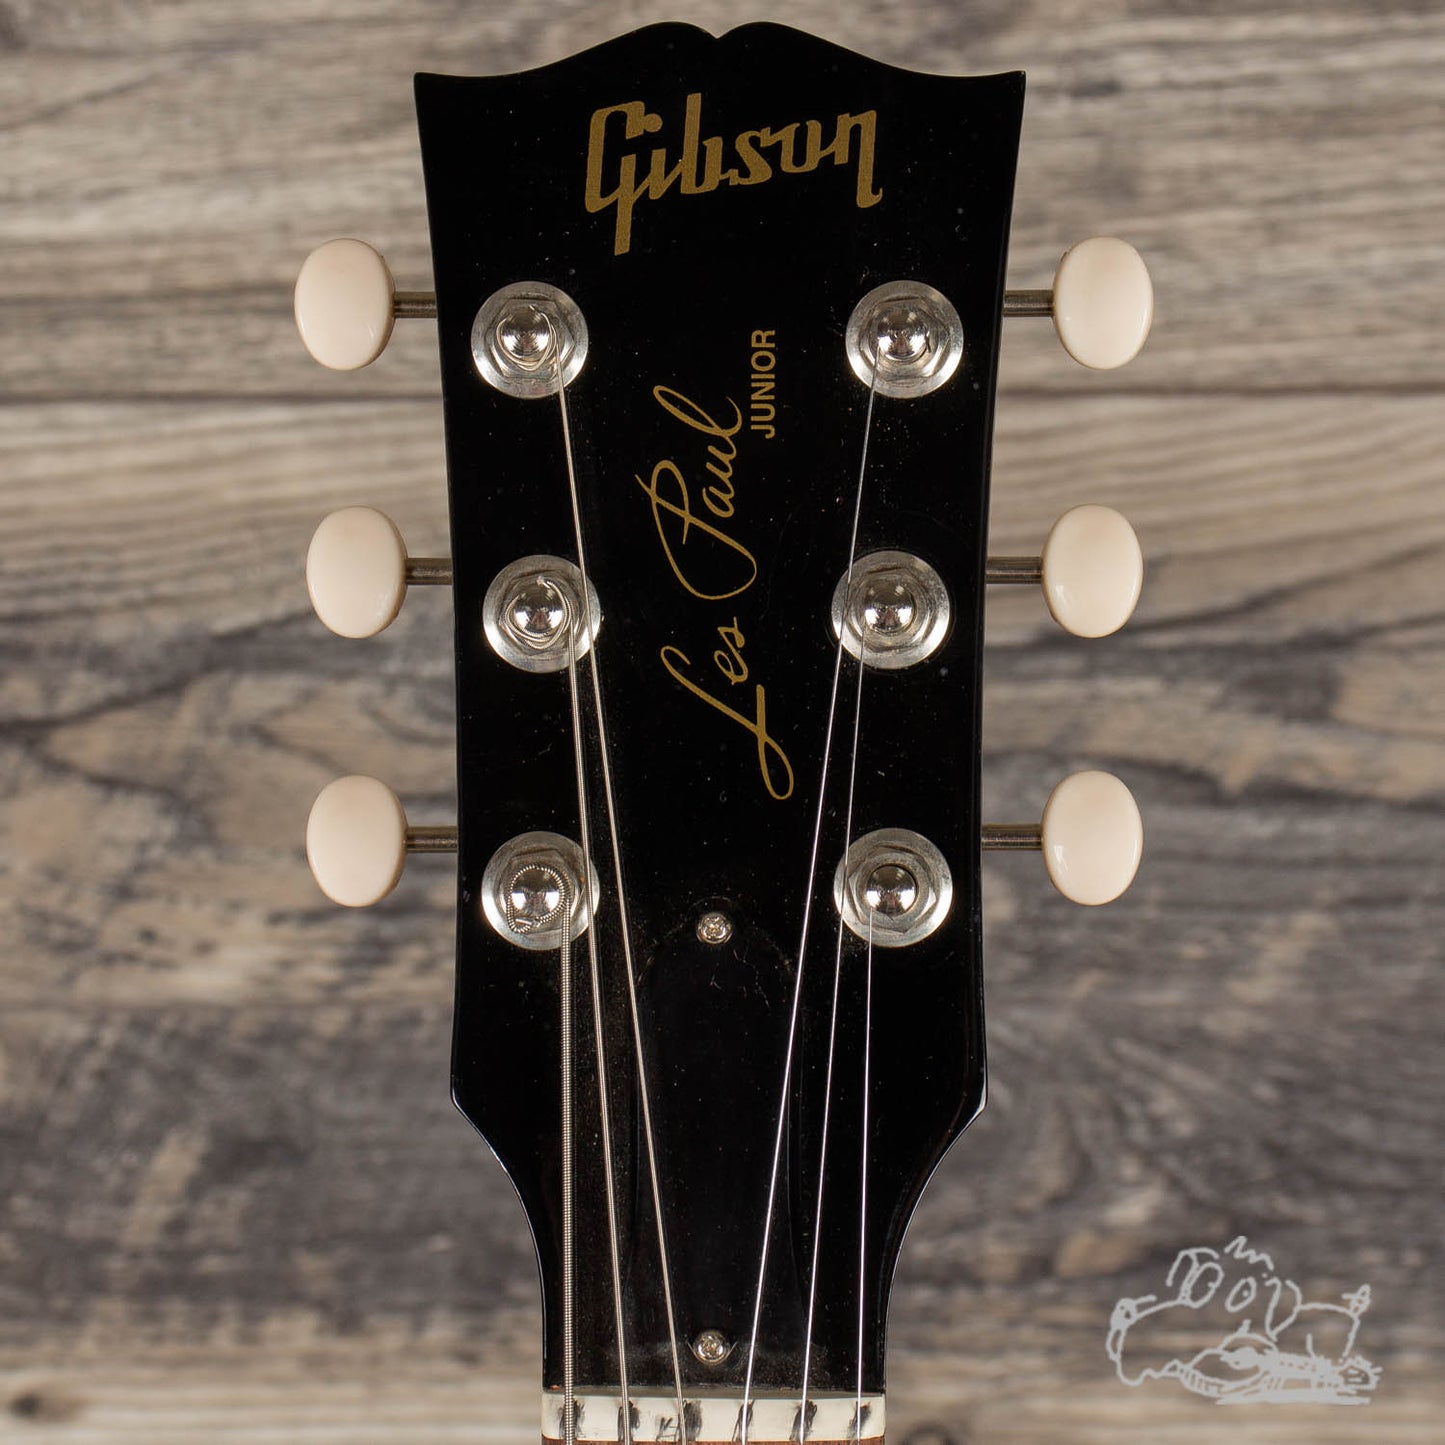 2002 Gibson Les Paul Jr.